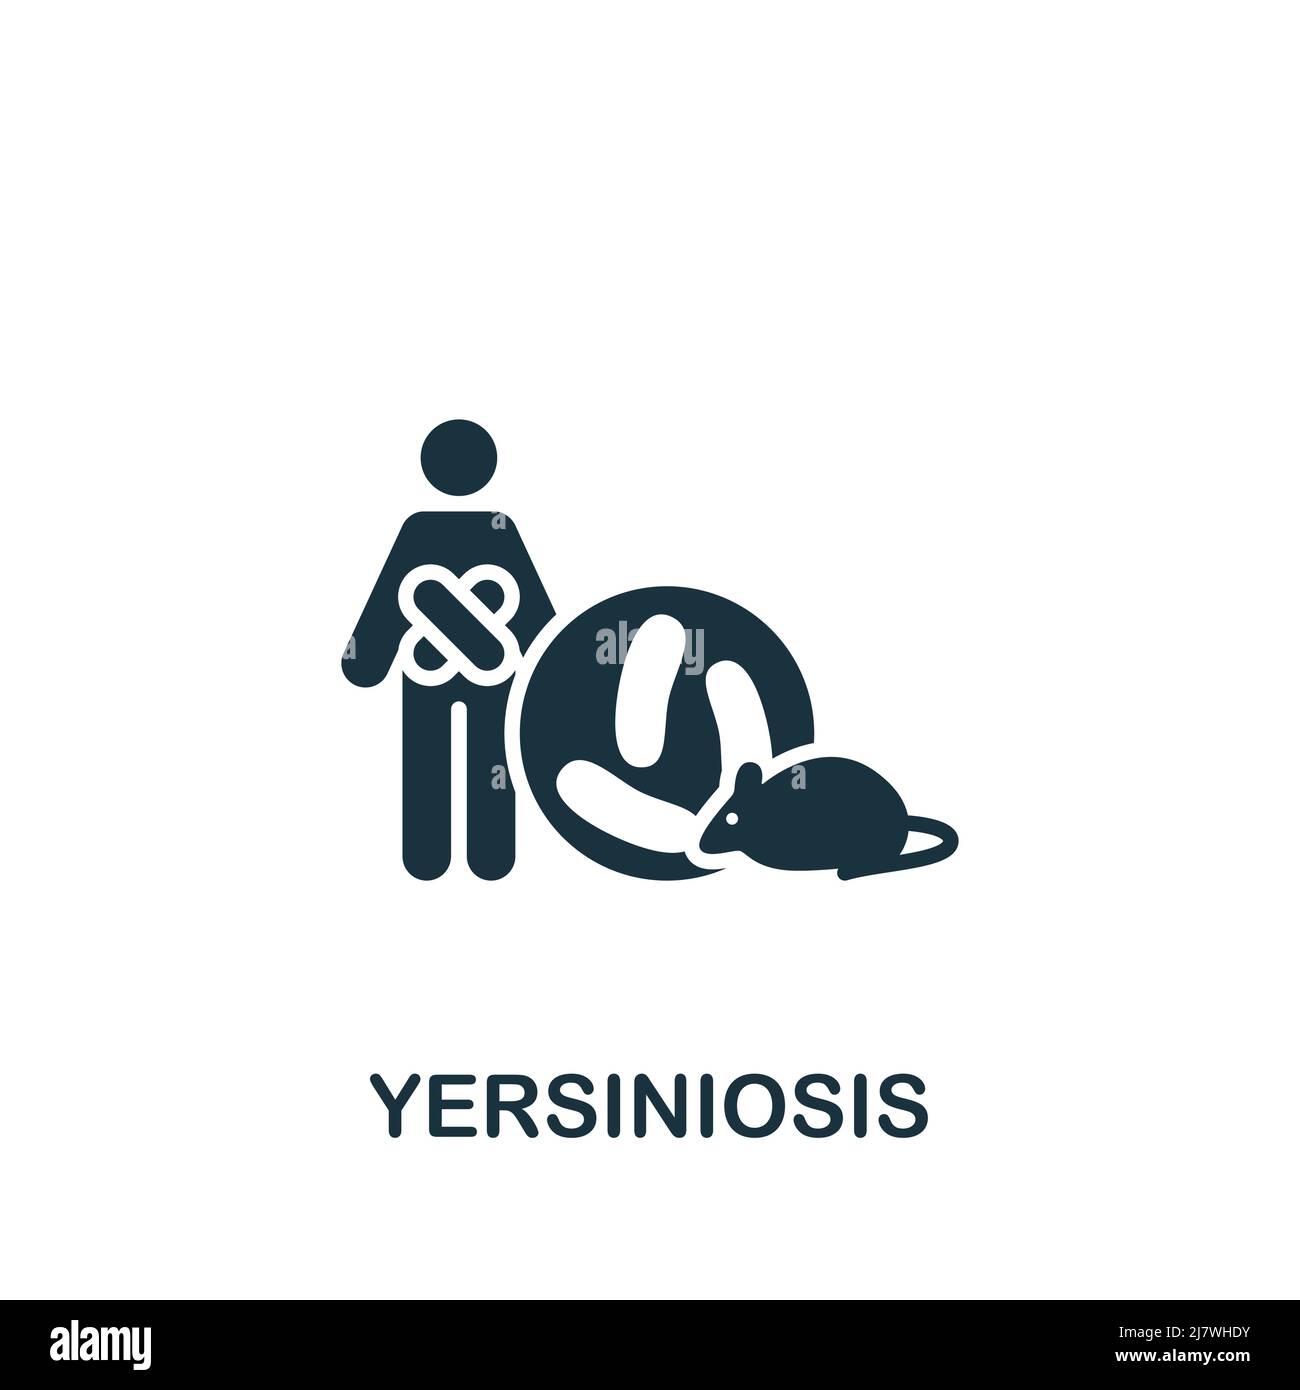 Yersiniosis icon. Monochrome simple Deseases icon for templates, web design and infographics Stock Vector